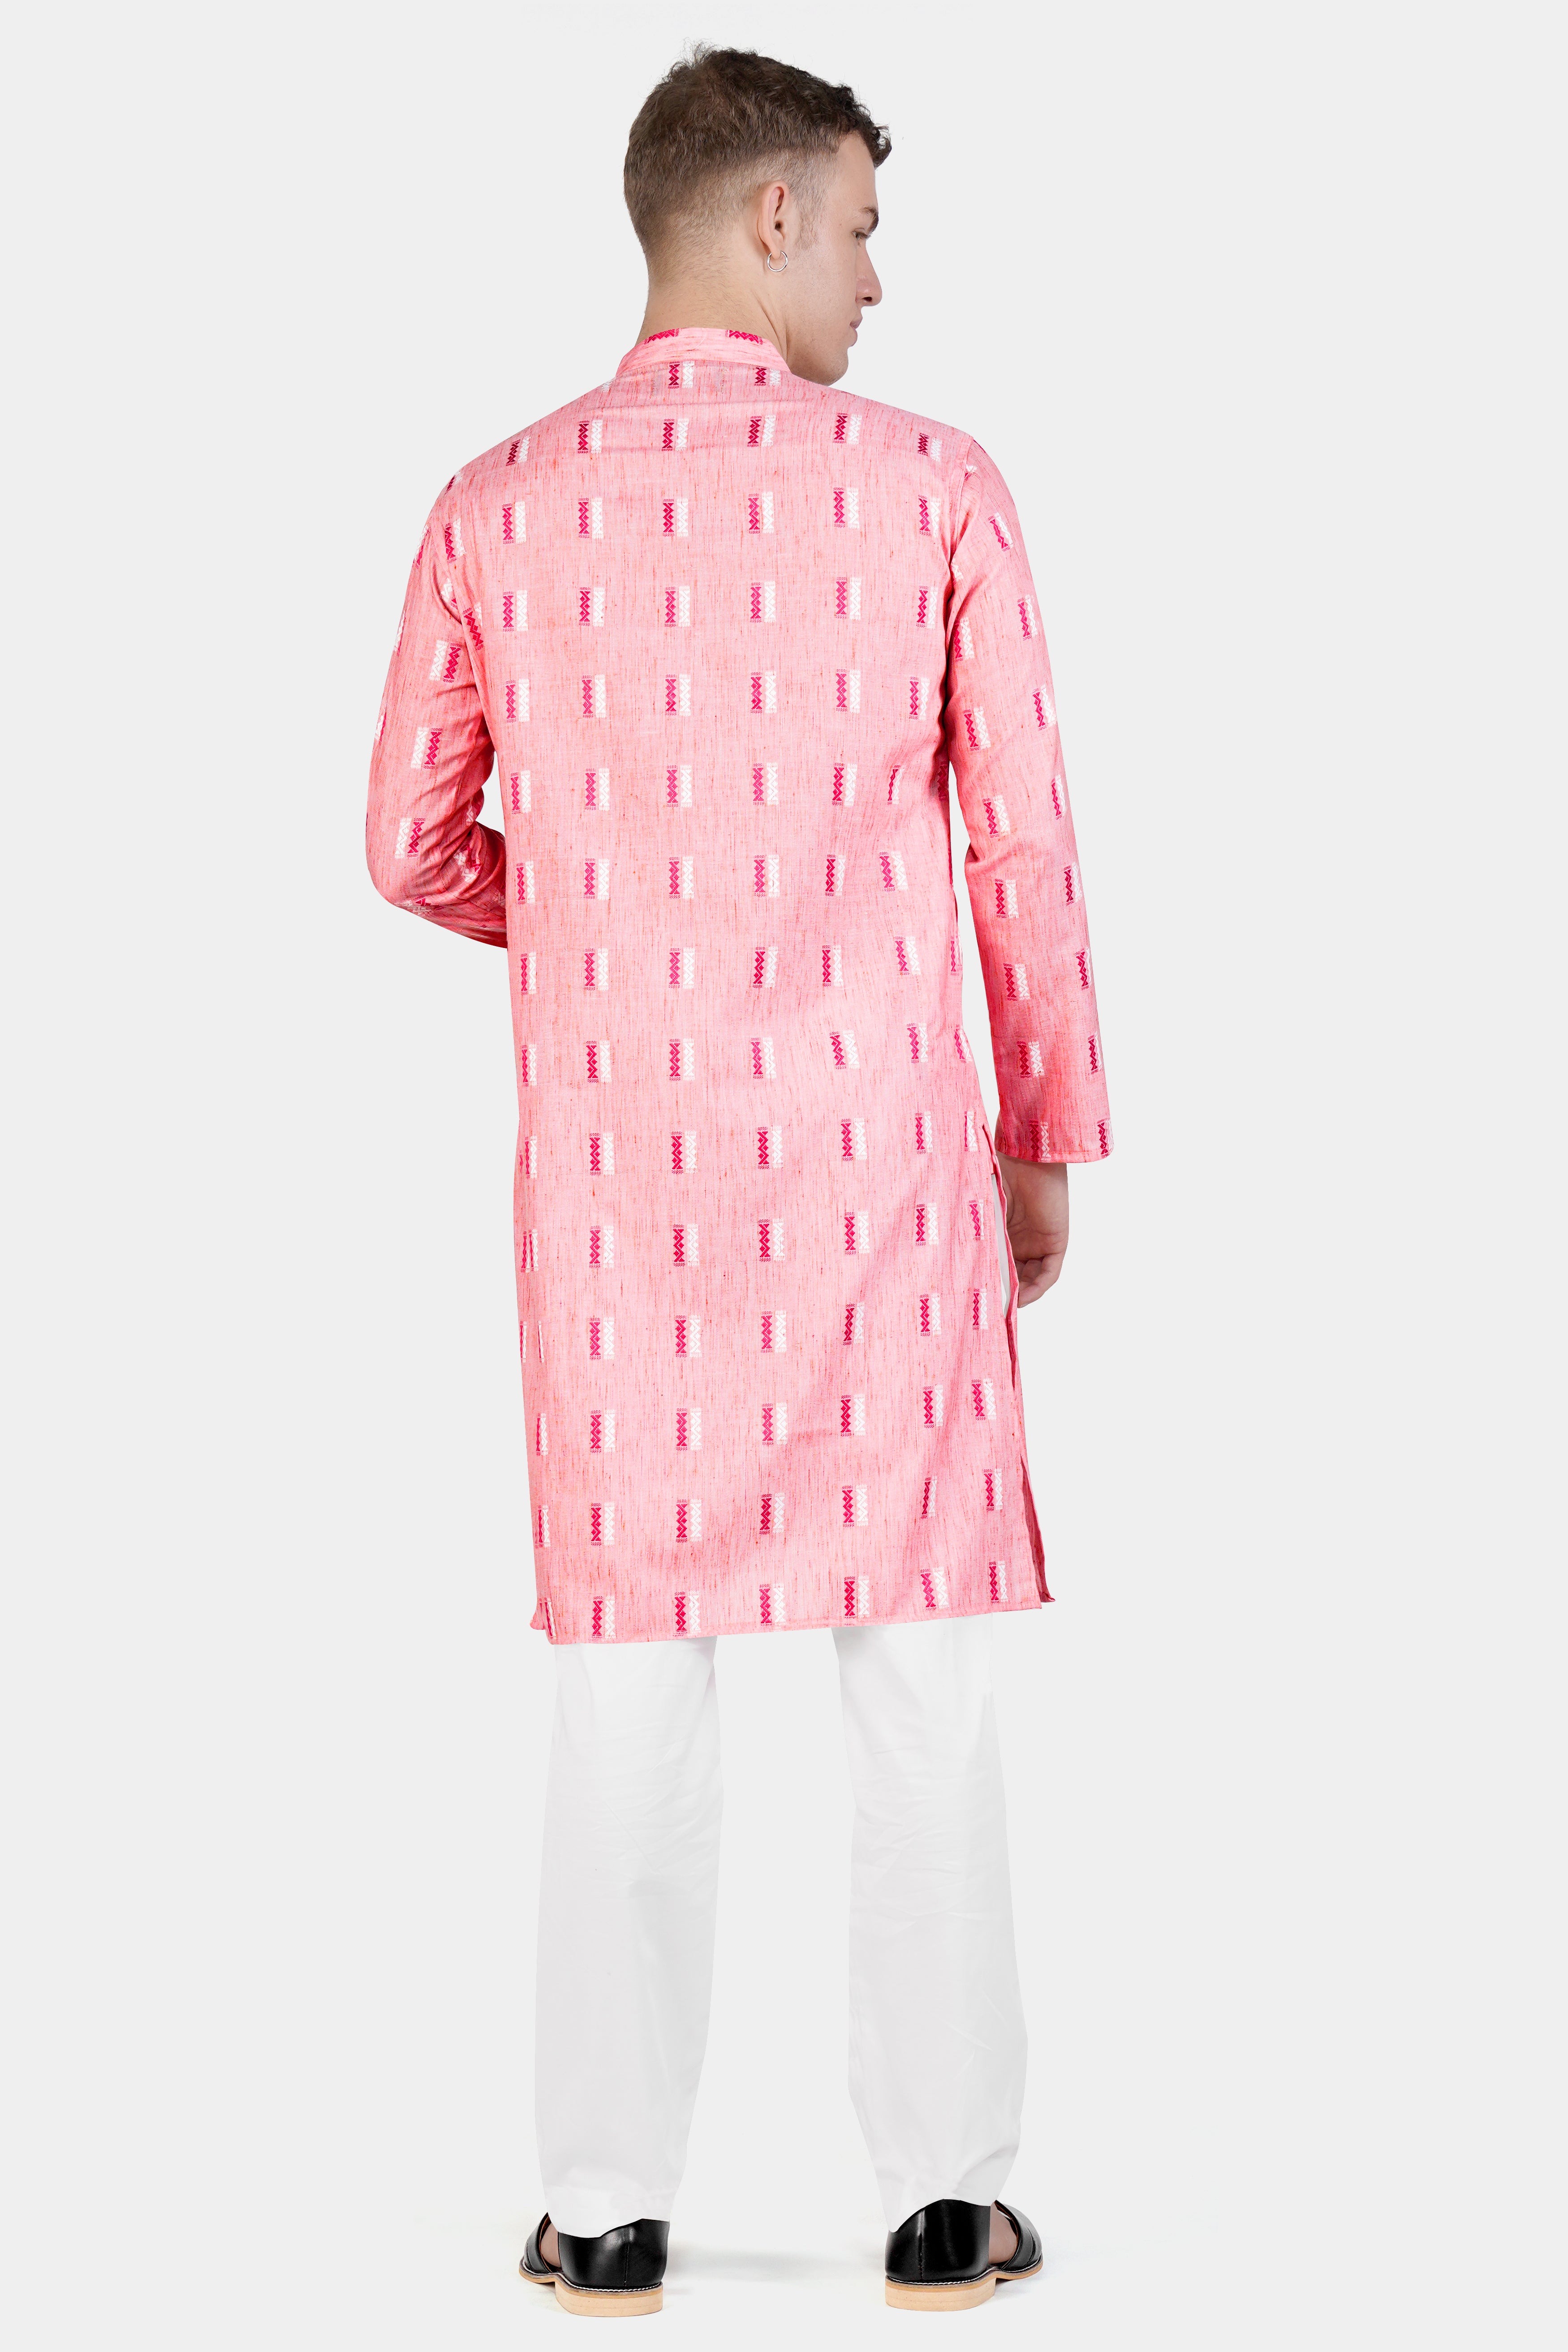 Light Rose Pink Zig-zag Textured Jacquard Premium Giza Cotton Kurta Set